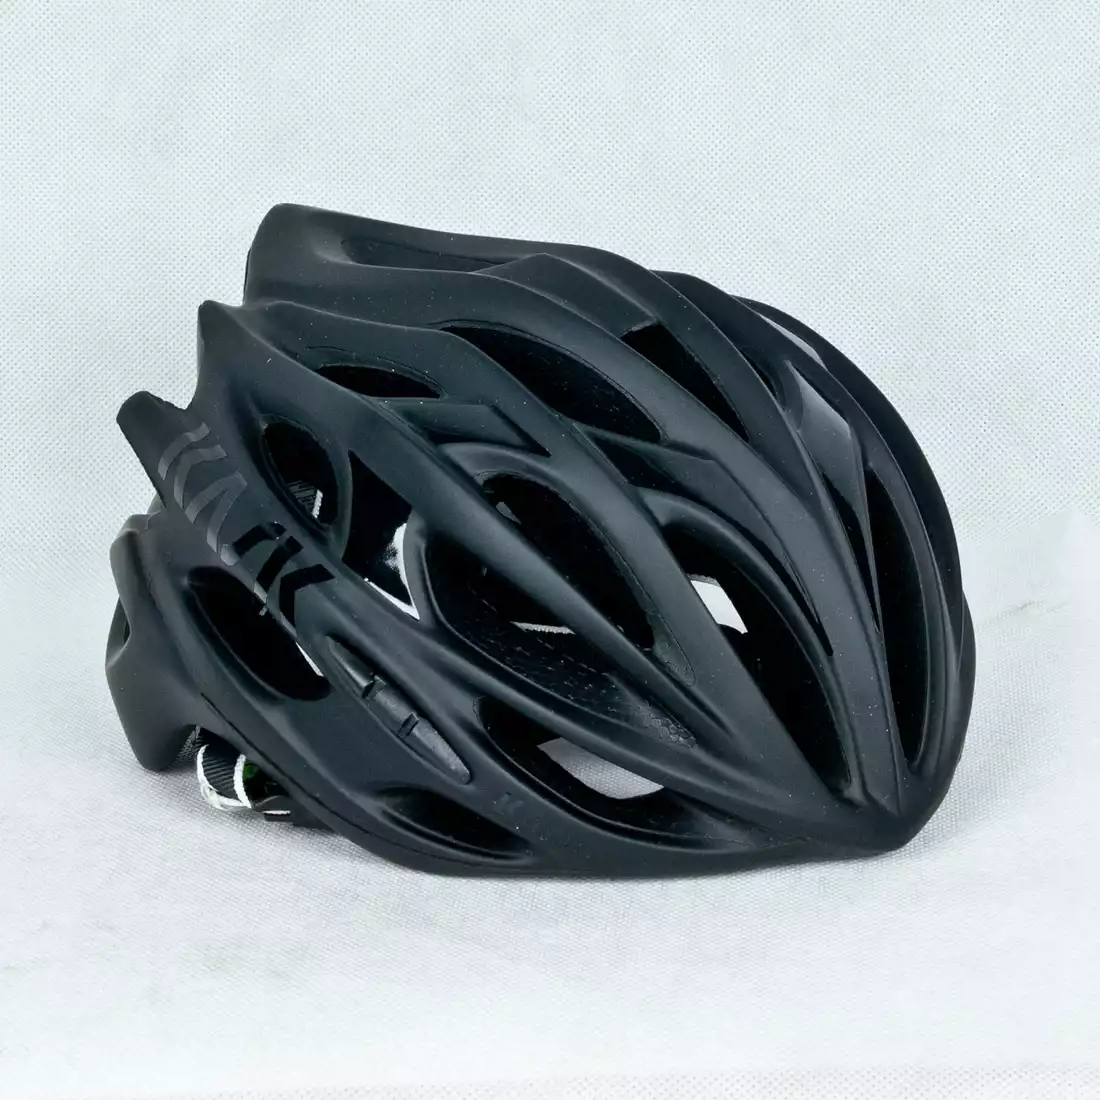 KASK MOJITO - kask rowerowy CHE00026.202 kolor:czarny mat